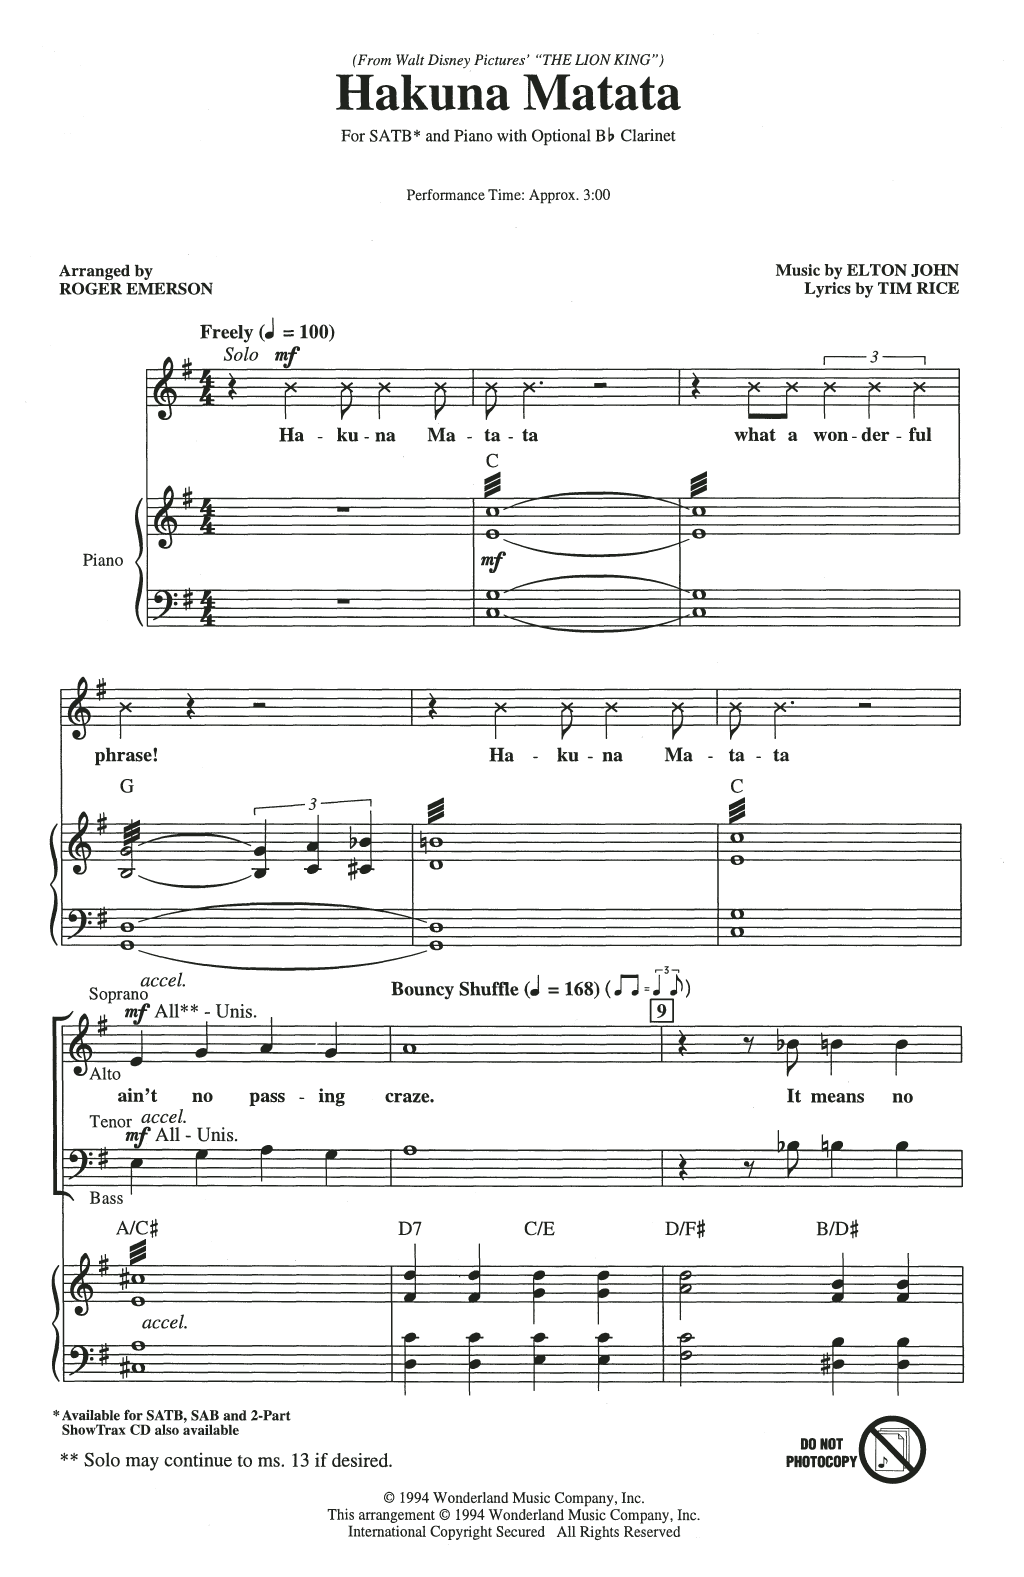 Elton John Hakuna Matata (from Disney's The Lion King) (arr. Roger Emerson) Sheet Music Notes & Chords for SATB Choir - Download or Print PDF